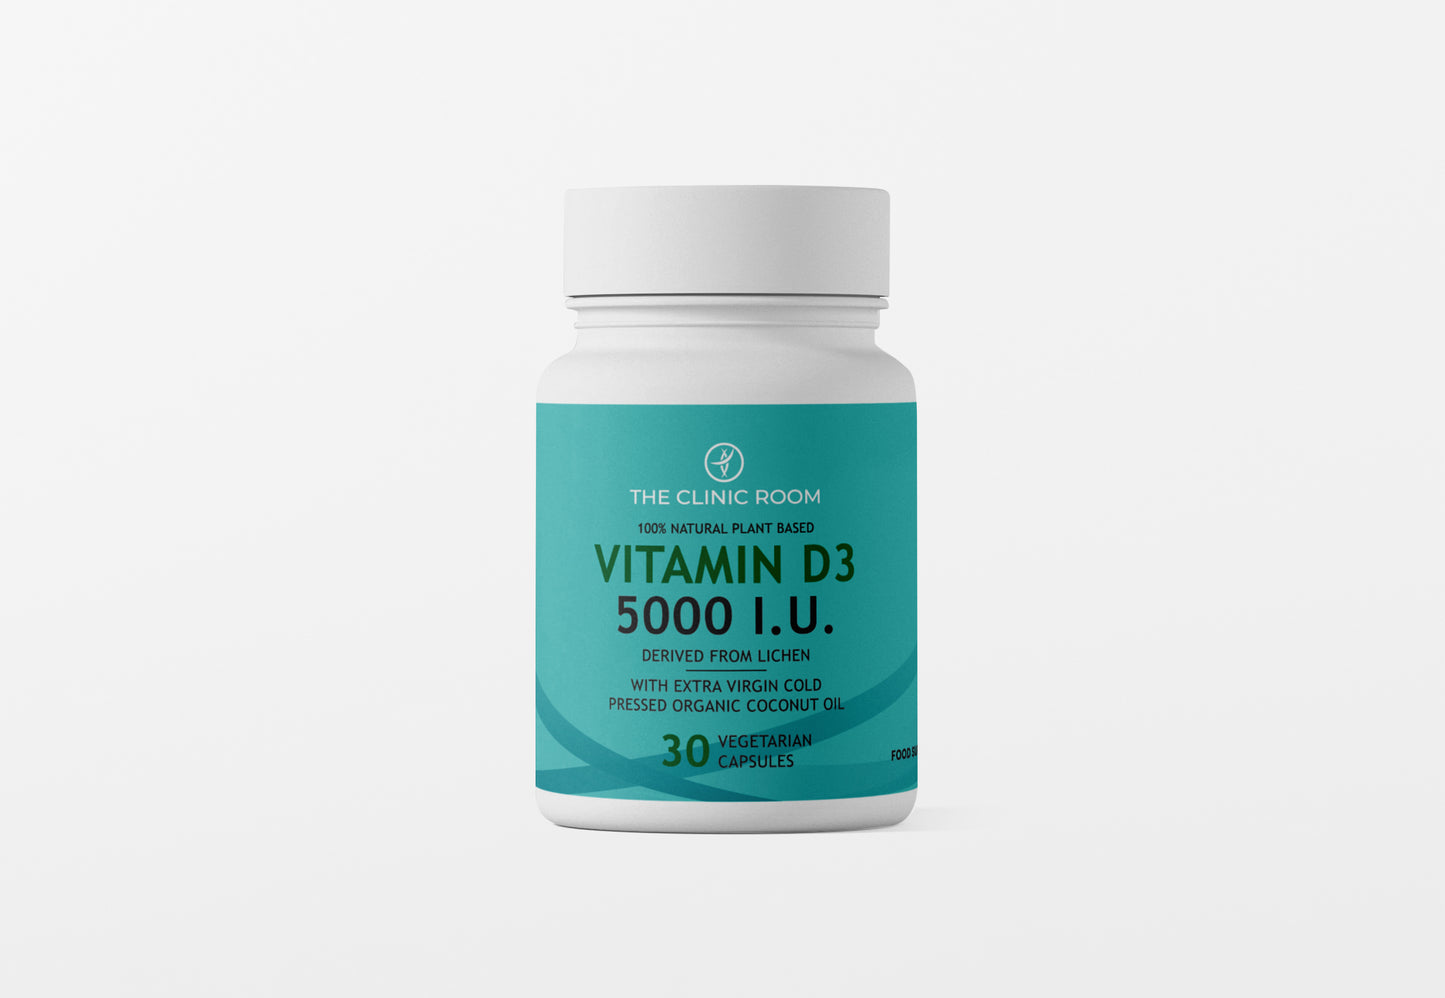 Vitamin D3 5000 I.U